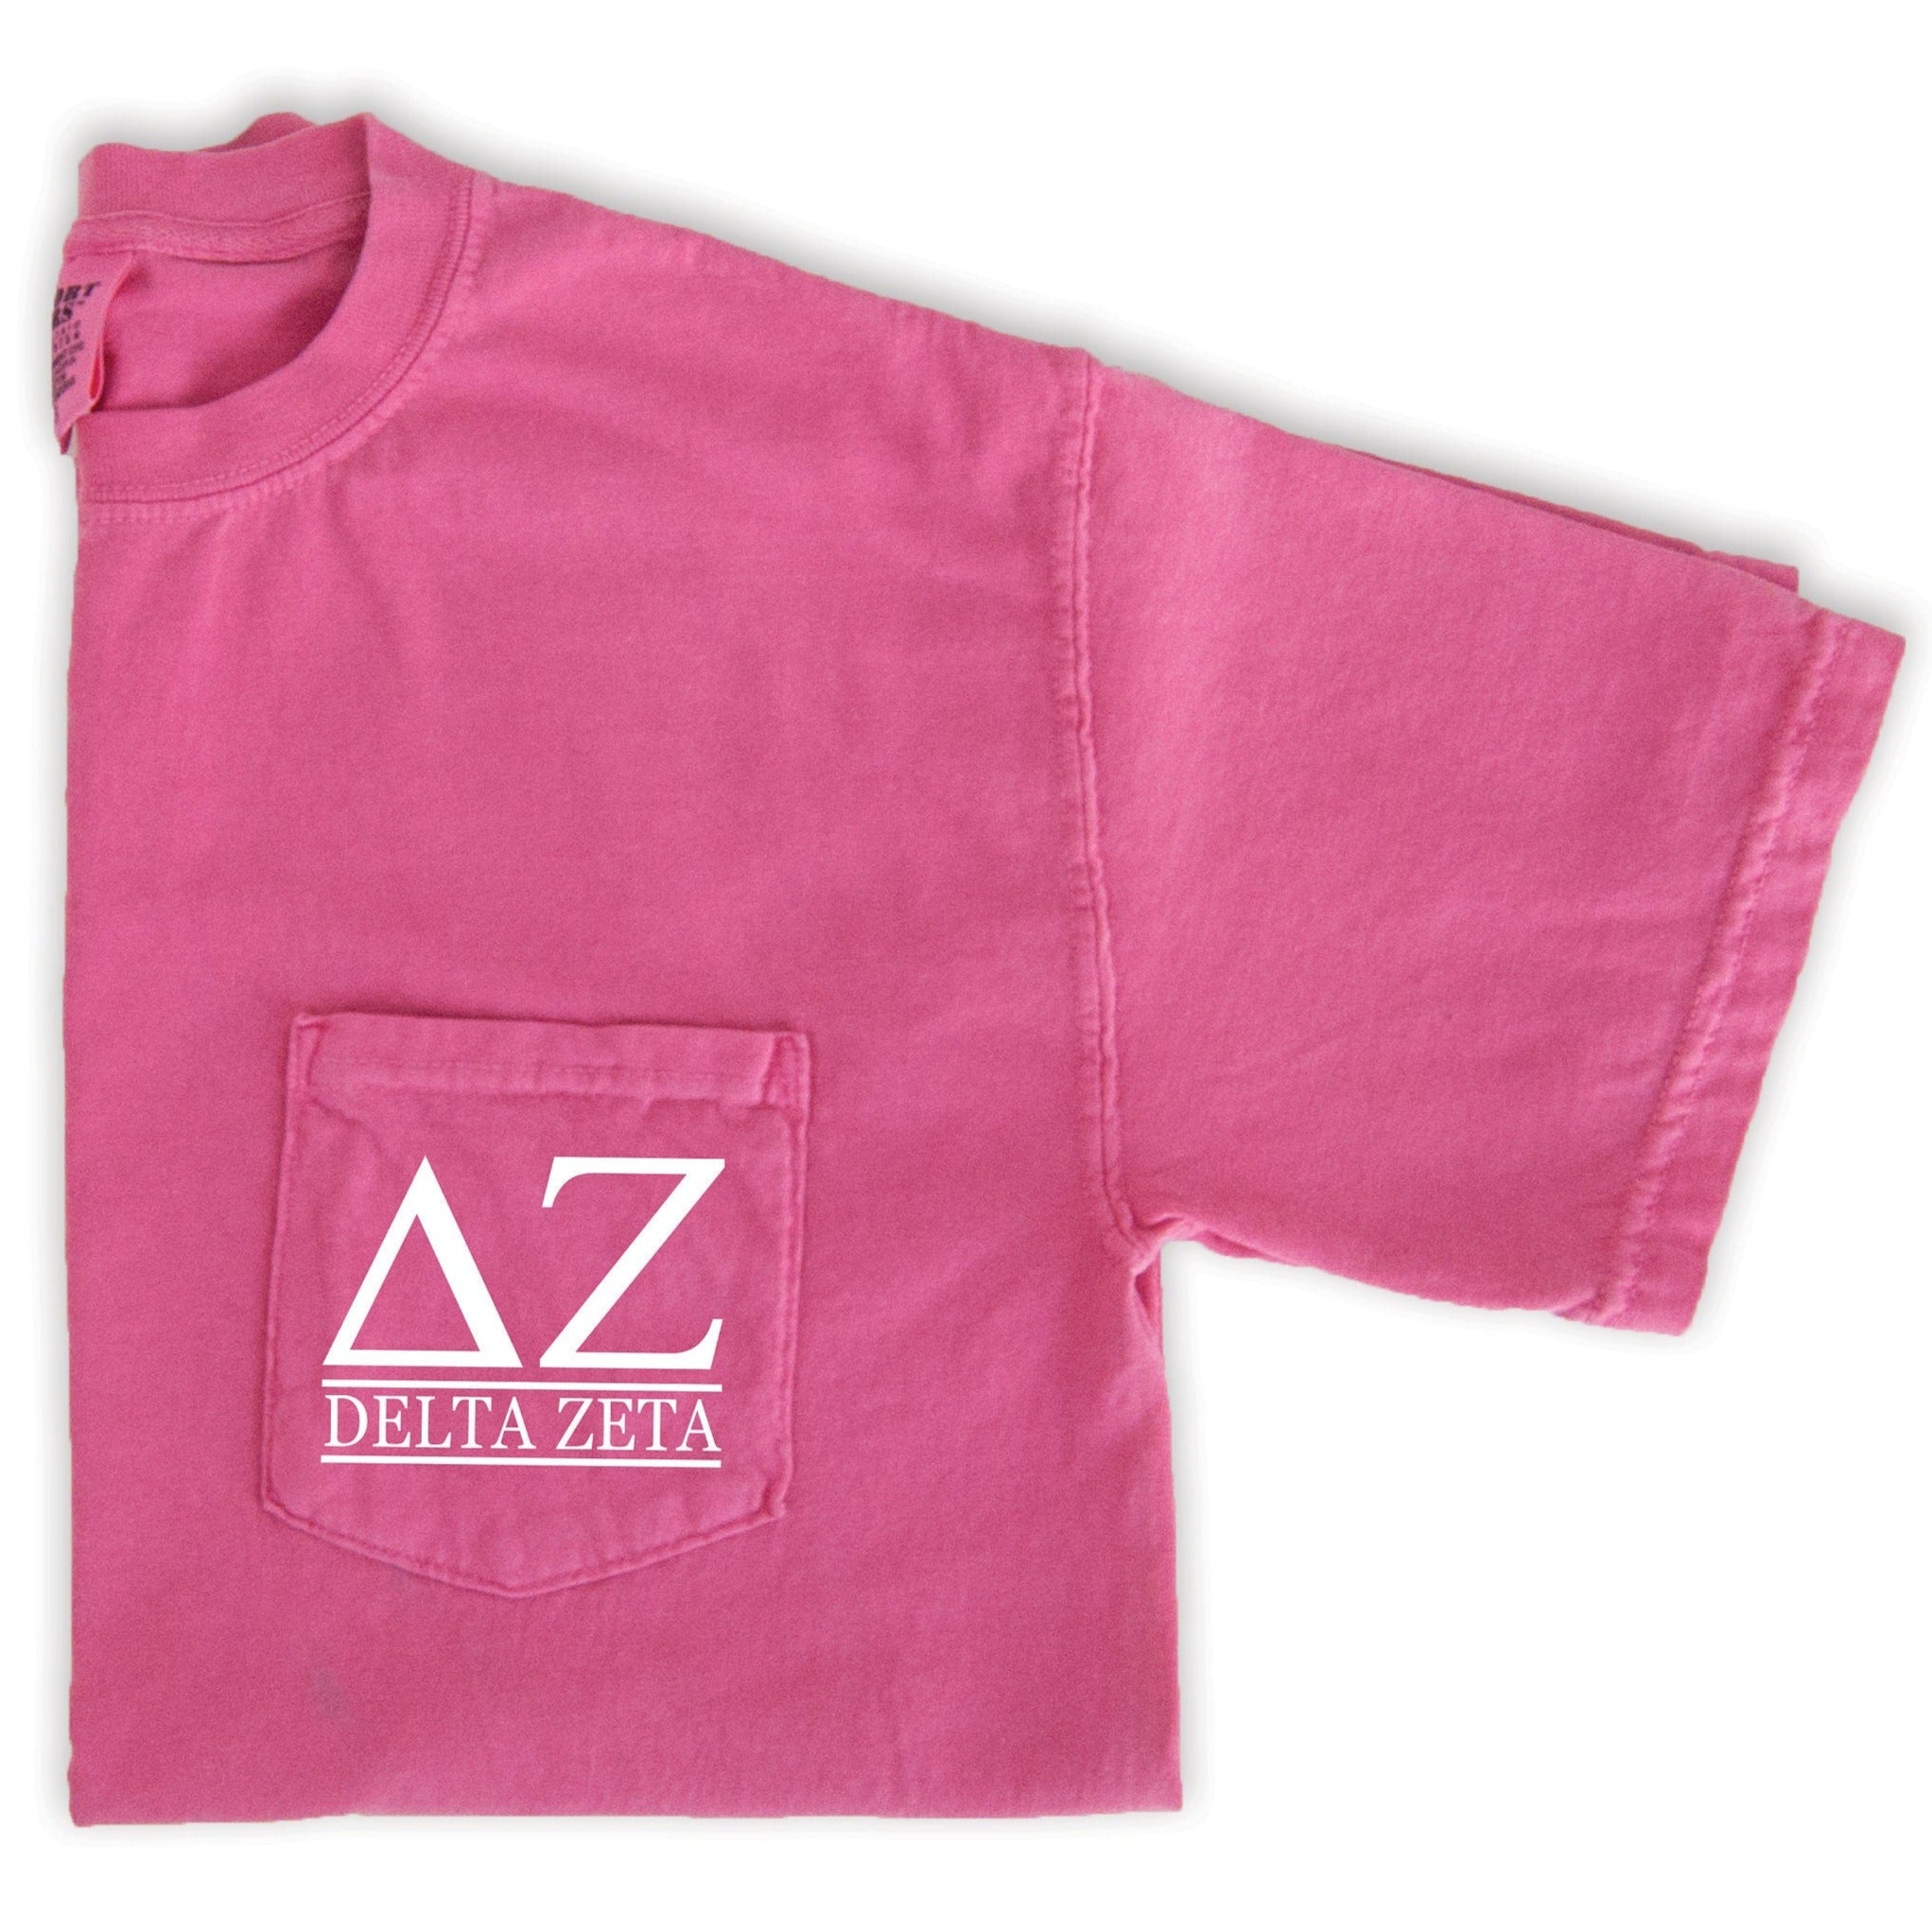 Delta Zeta Block Letters T-Shirt - Pink - Go Greek Chic